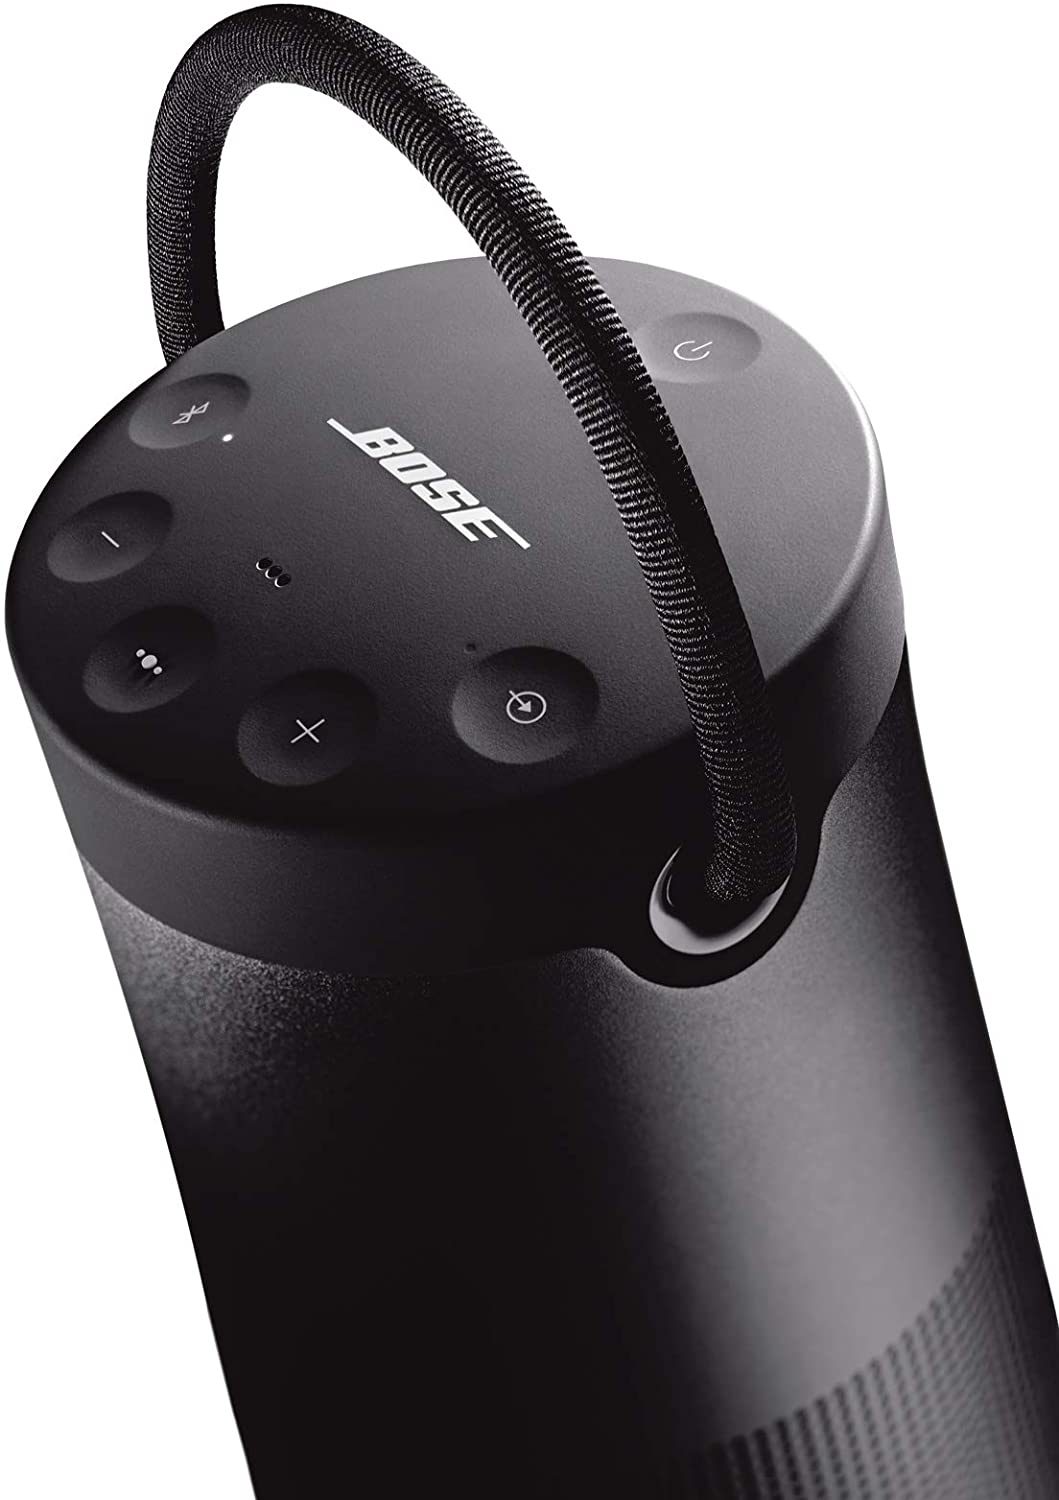 Bose SoundLink Revolve Series II Portable Bluetooth Speaker